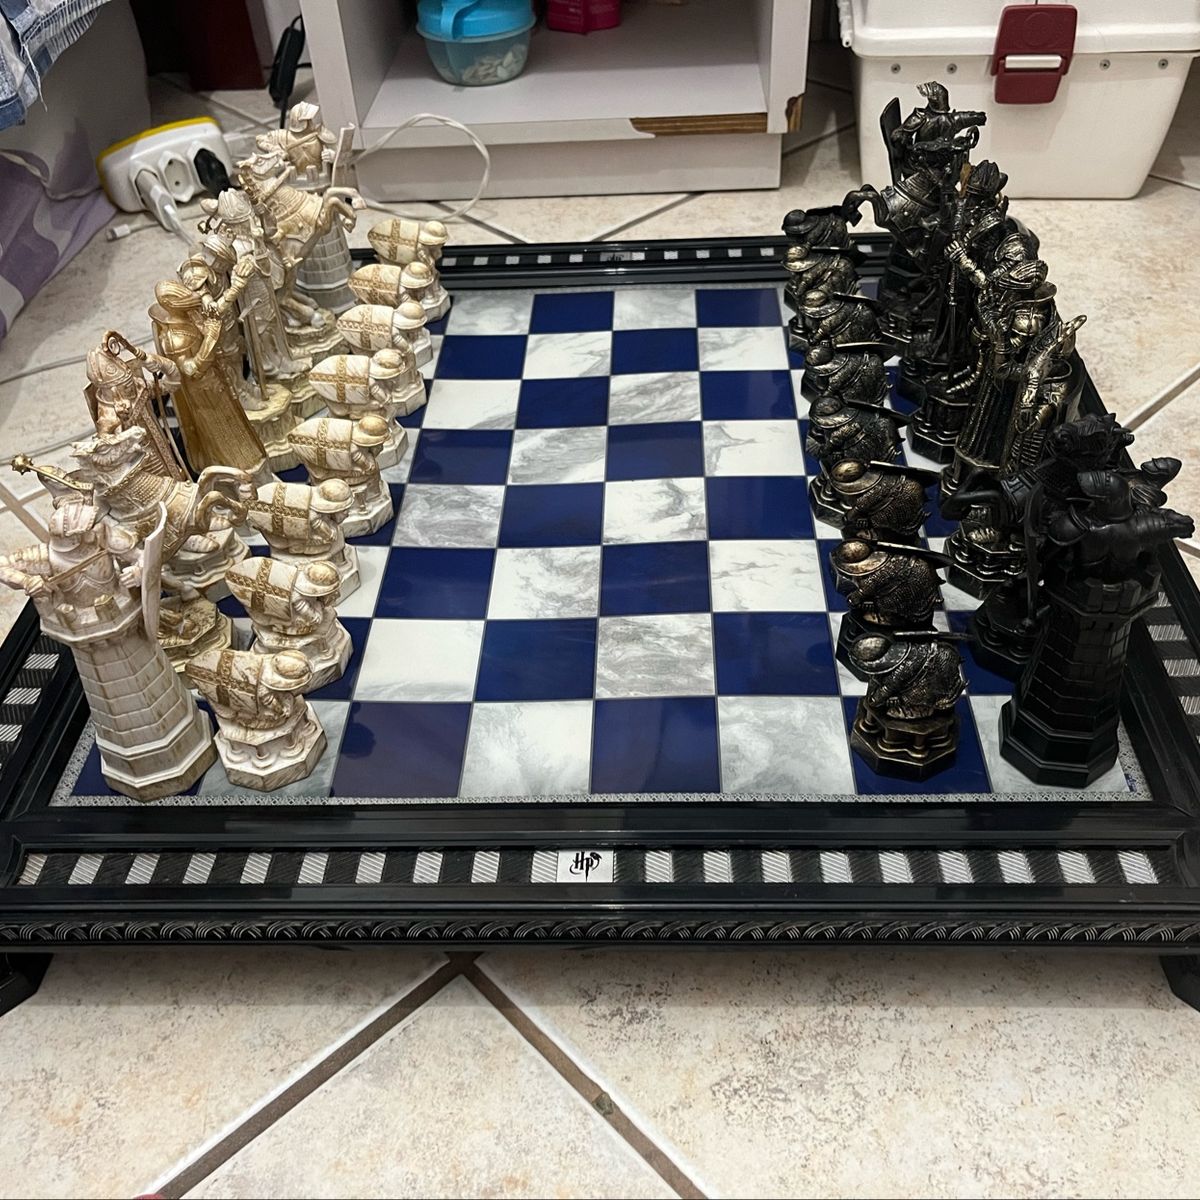 Harri filme & tv hogwarrts finalmente desafiou potter o xadrez wizard  tabuleiro de xadrez conjunto para